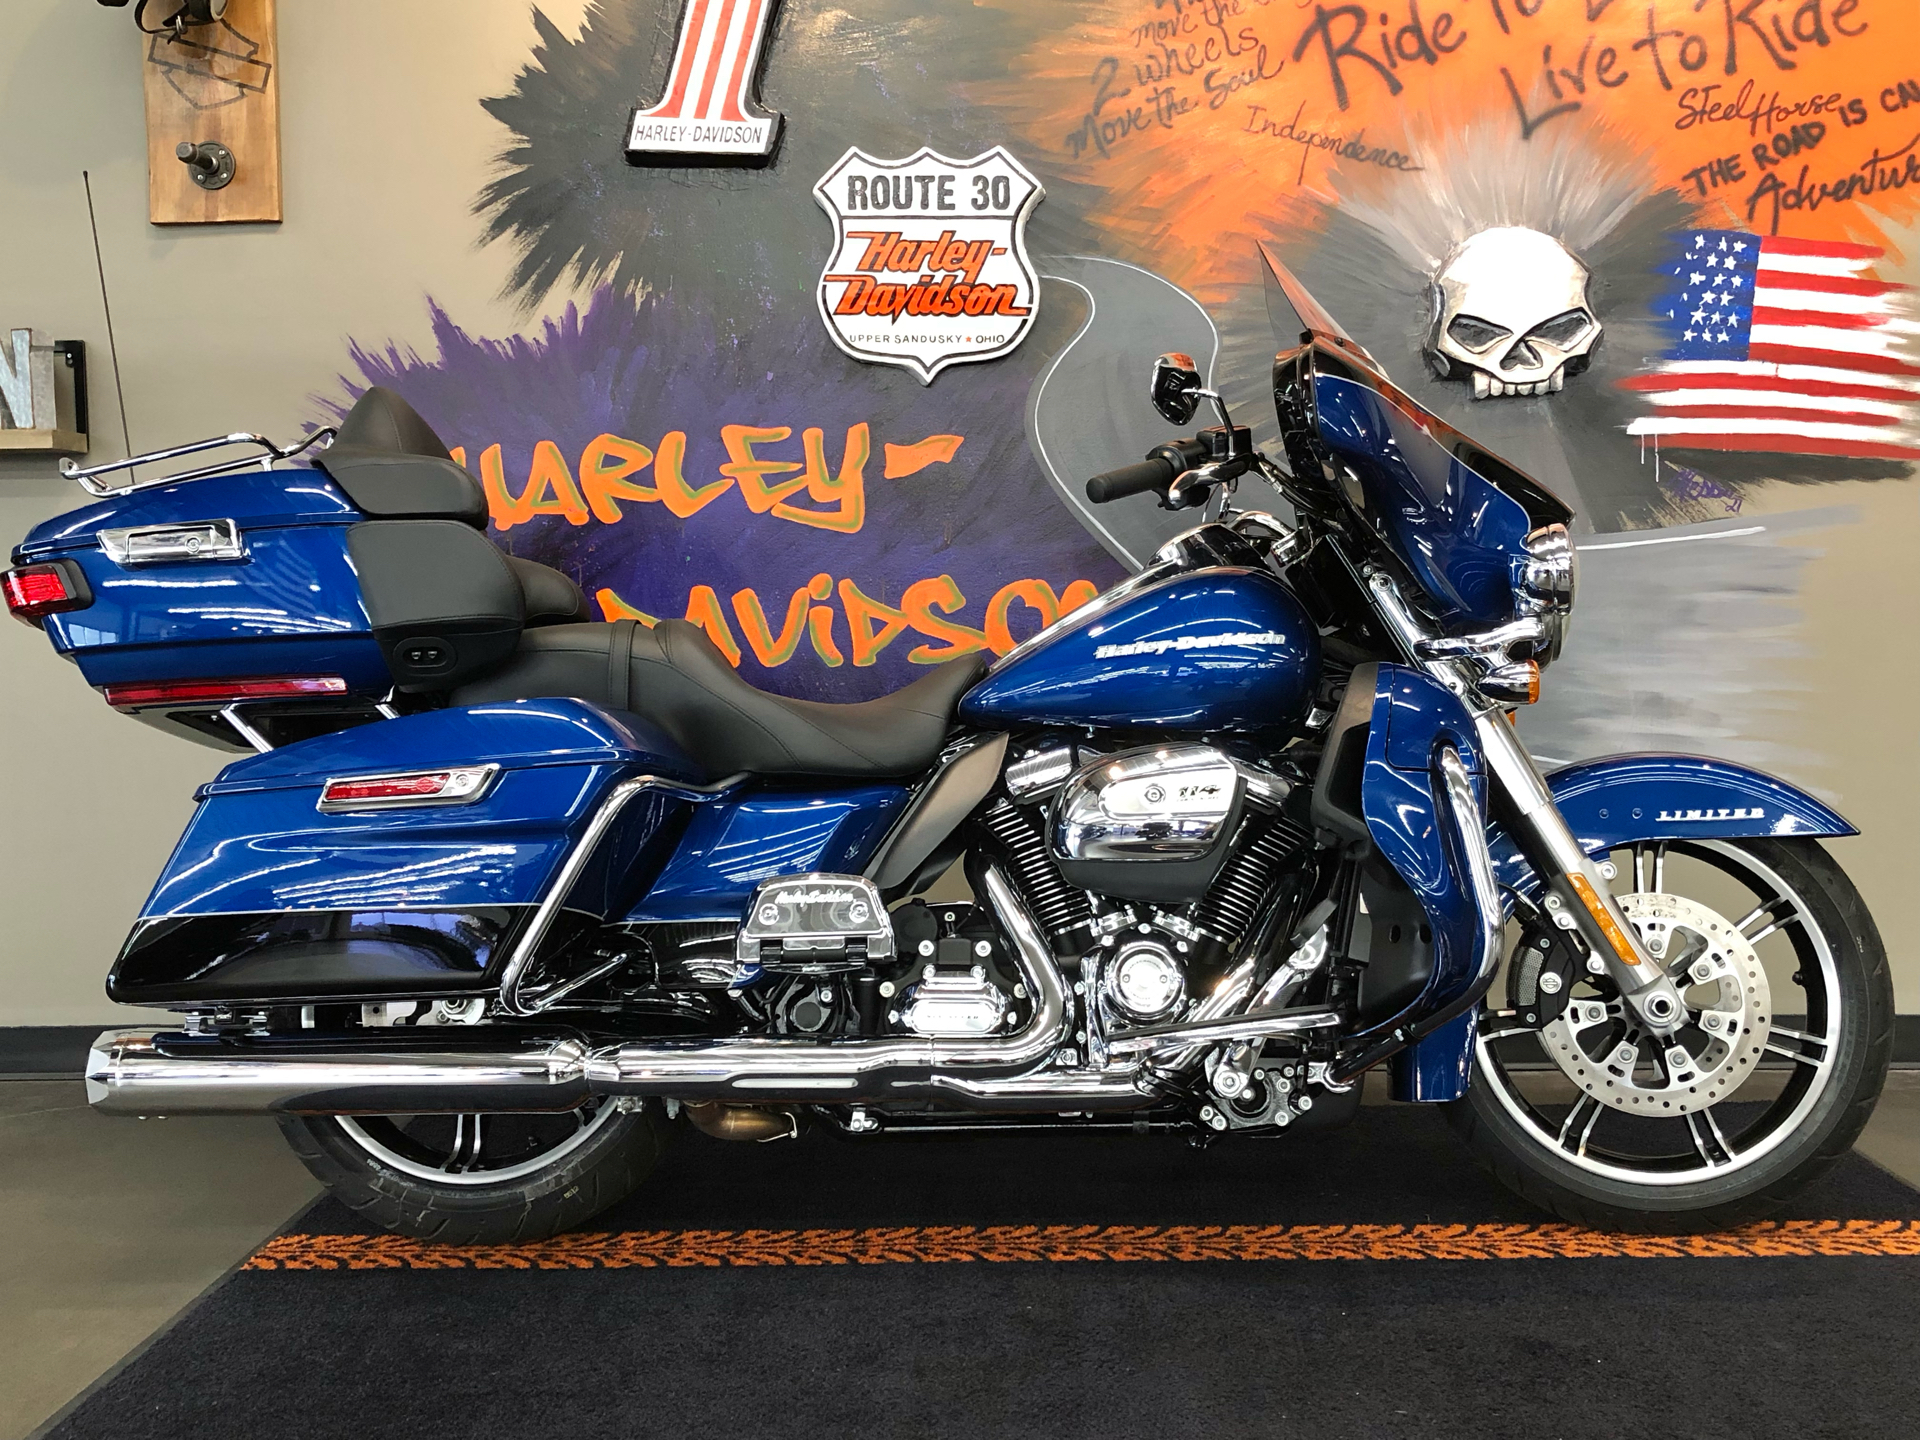 2022 Harley-Davidson Ultra Limited in Upper Sandusky, Ohio - Photo 1